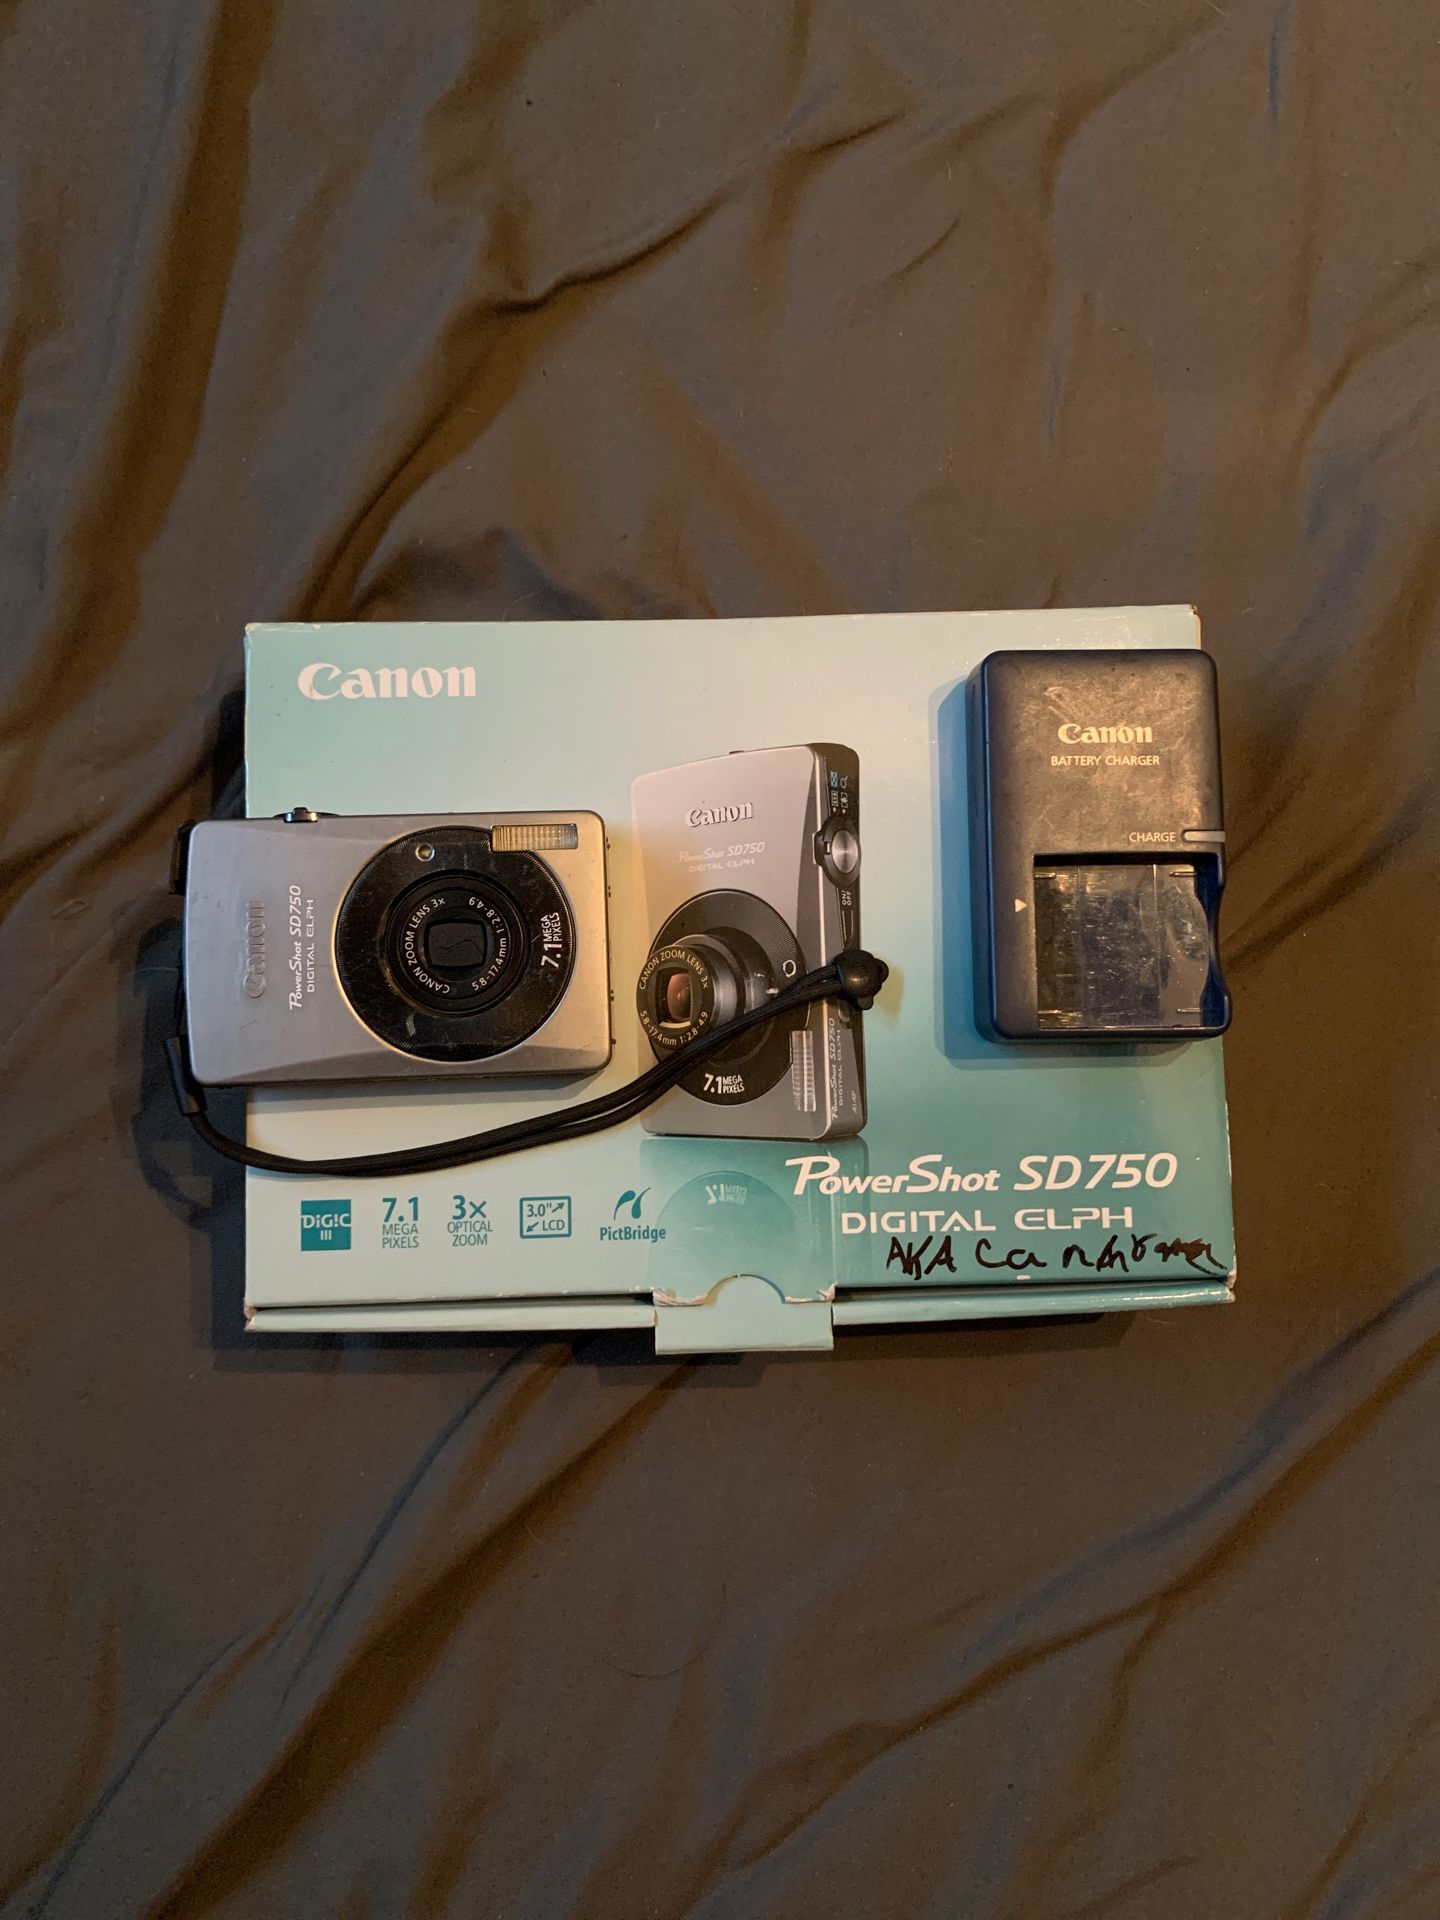 Canon Powershot SD750 Digital camera.